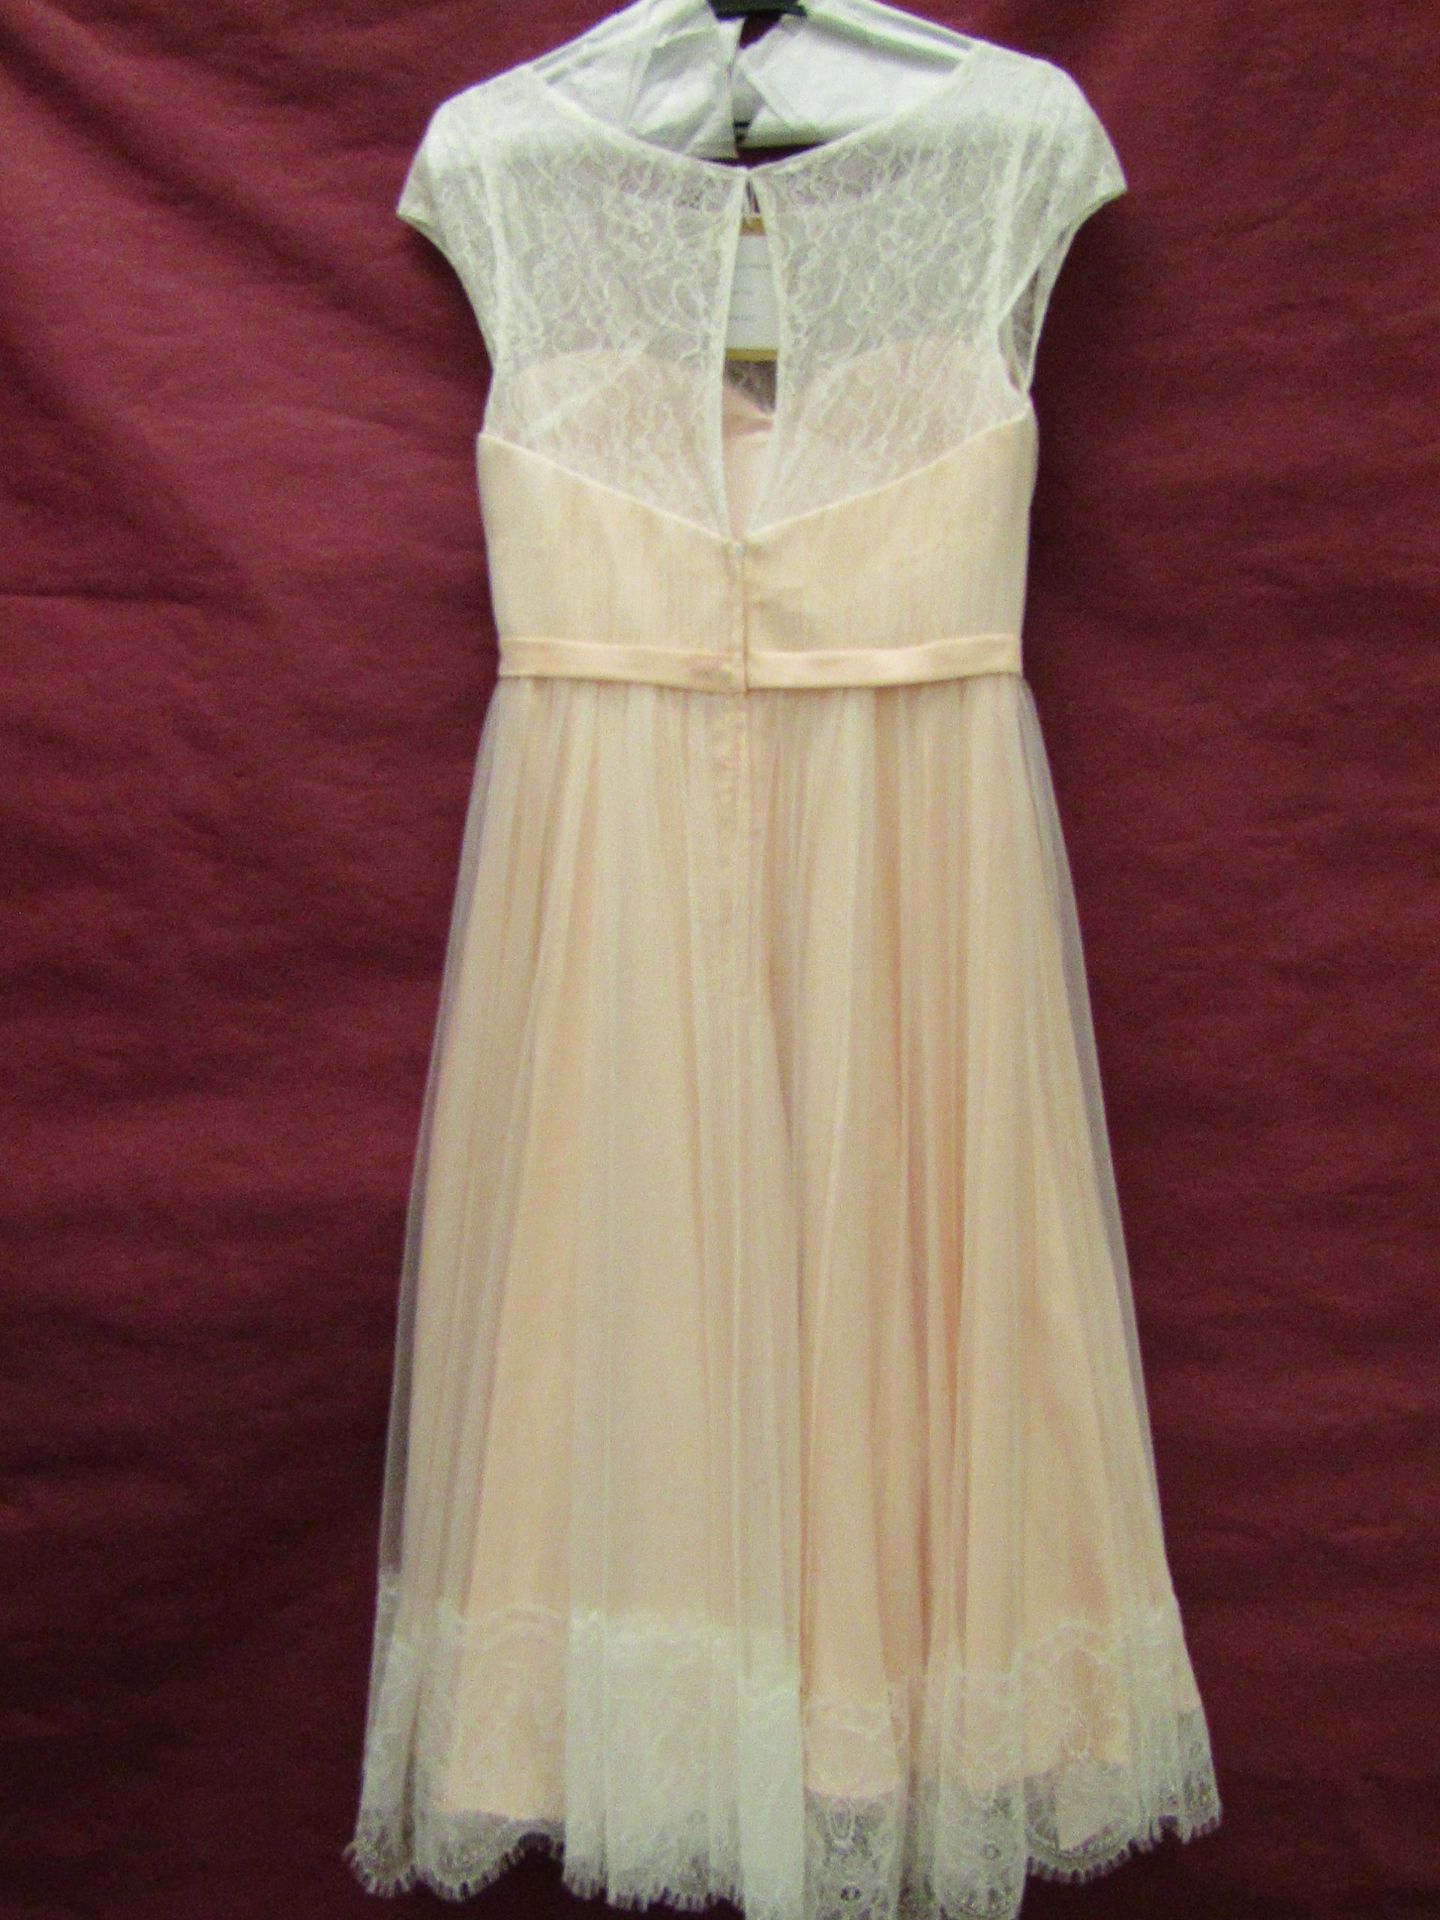 No VAT!! Vintage Inspired Designer Wedding / Bridesmaid Dress in Blush & White Lace size 12. Brand